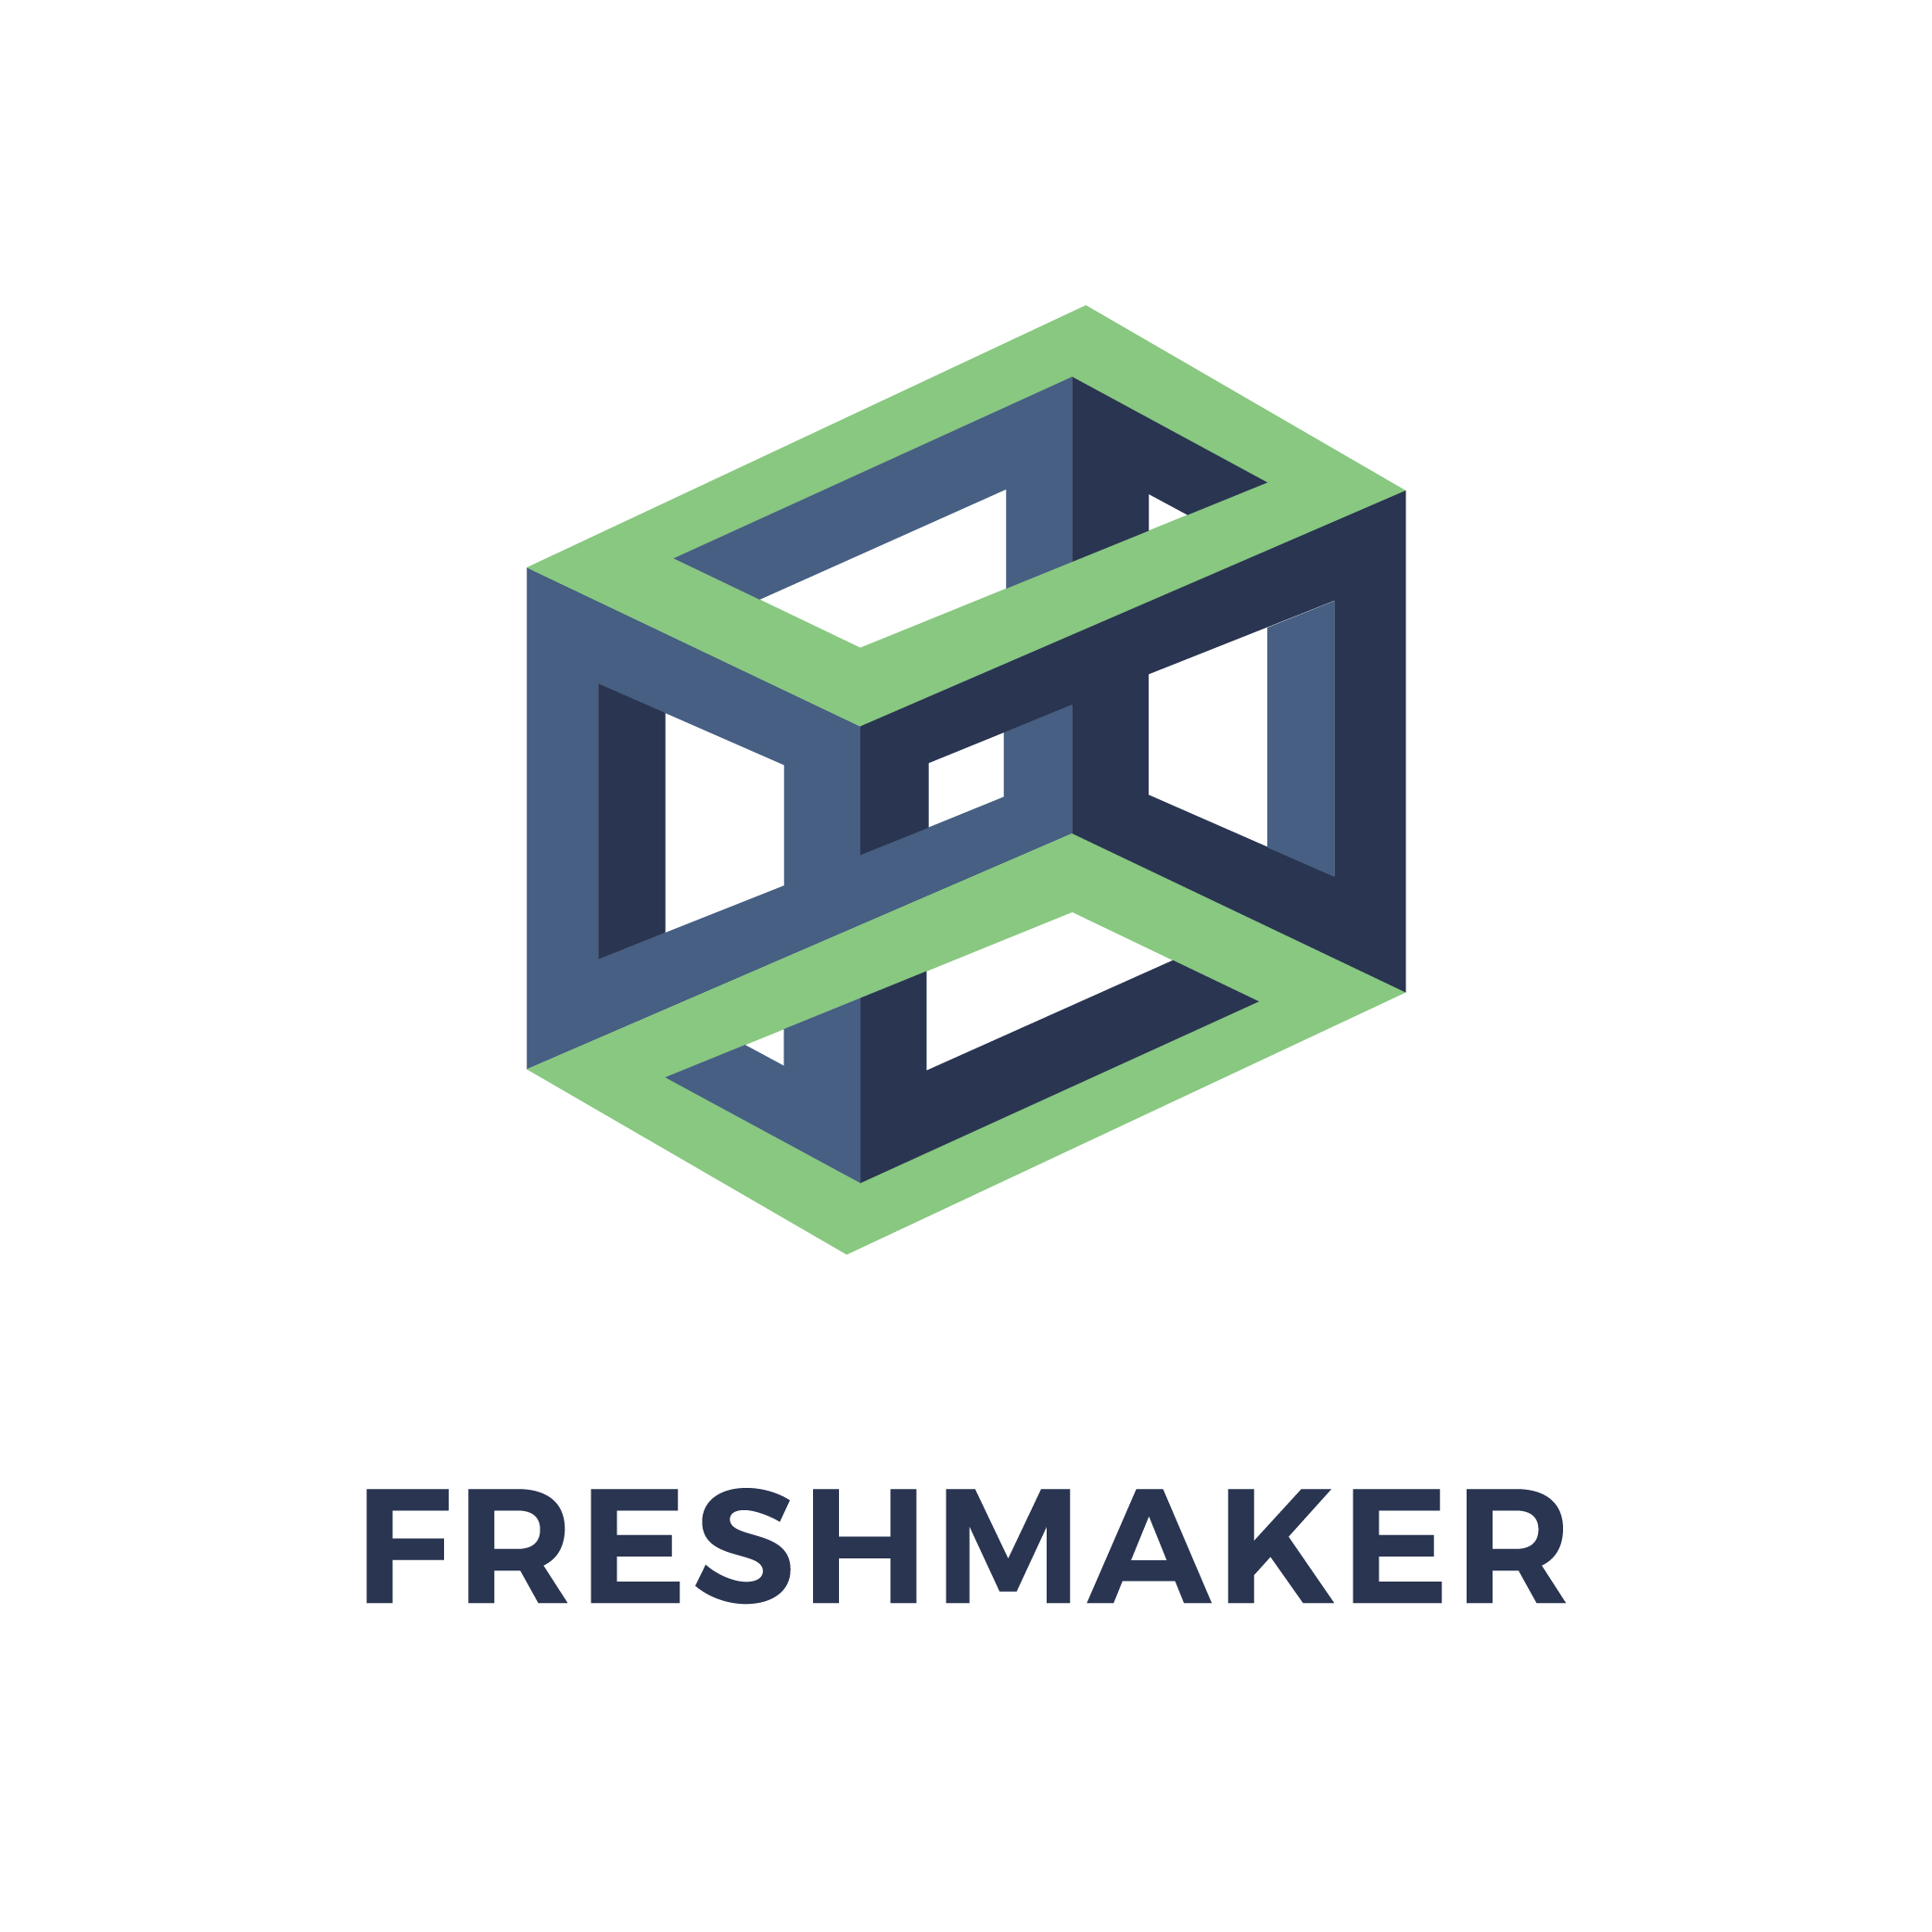 Freshmaker logo